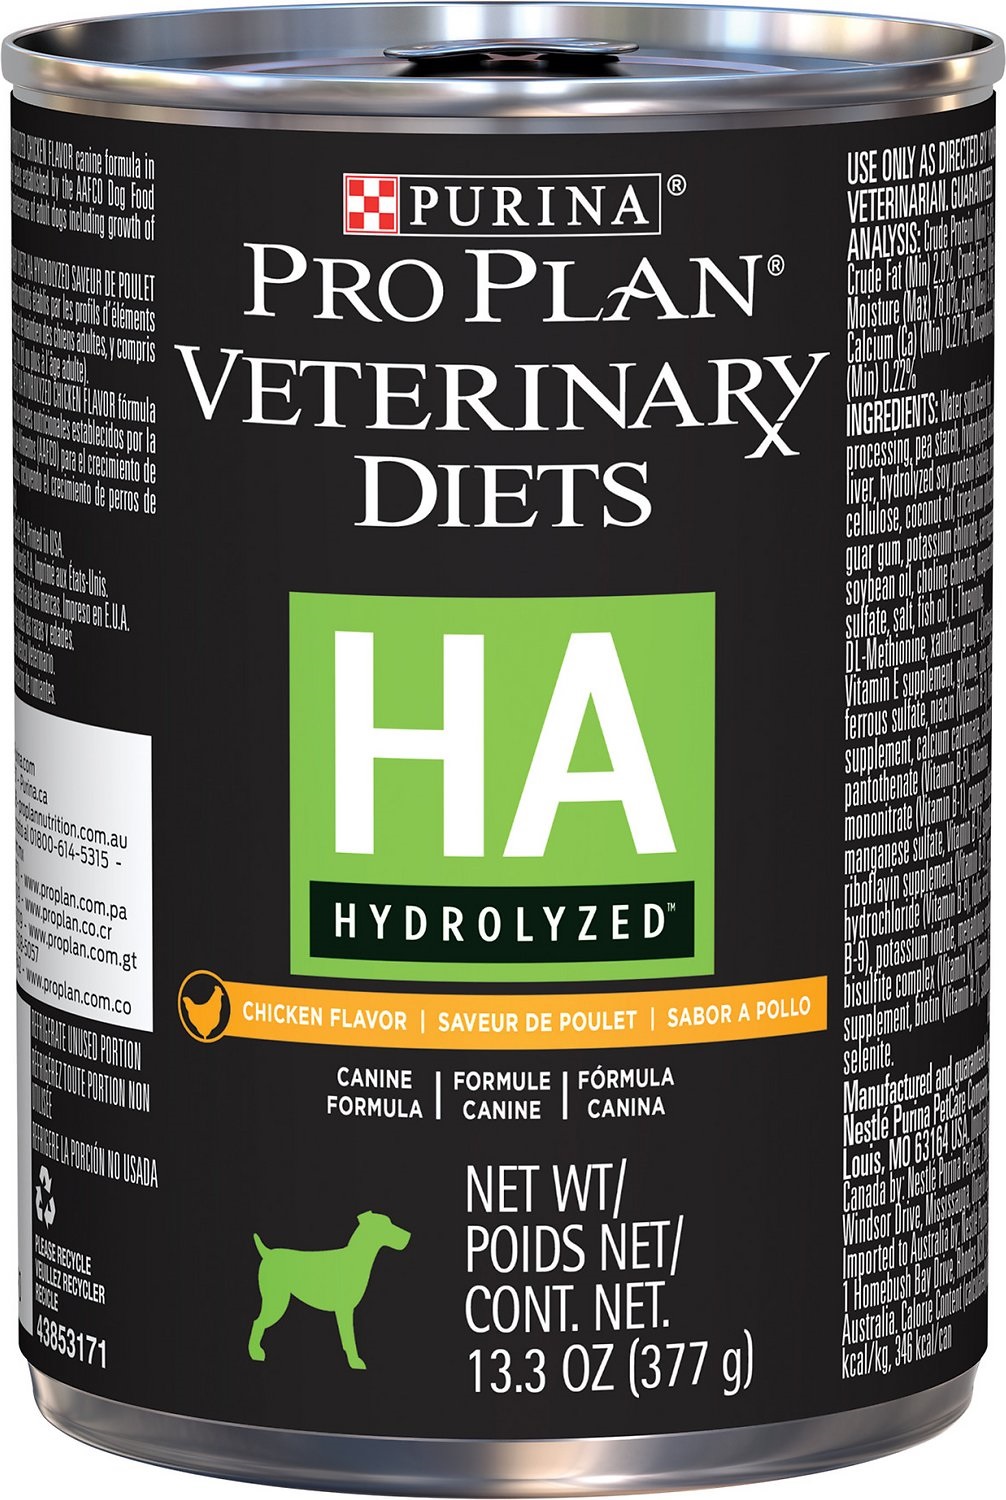 purina-pro-plan-veterinary-diets-ha-hydrolyzed-formula-chicken-flavor